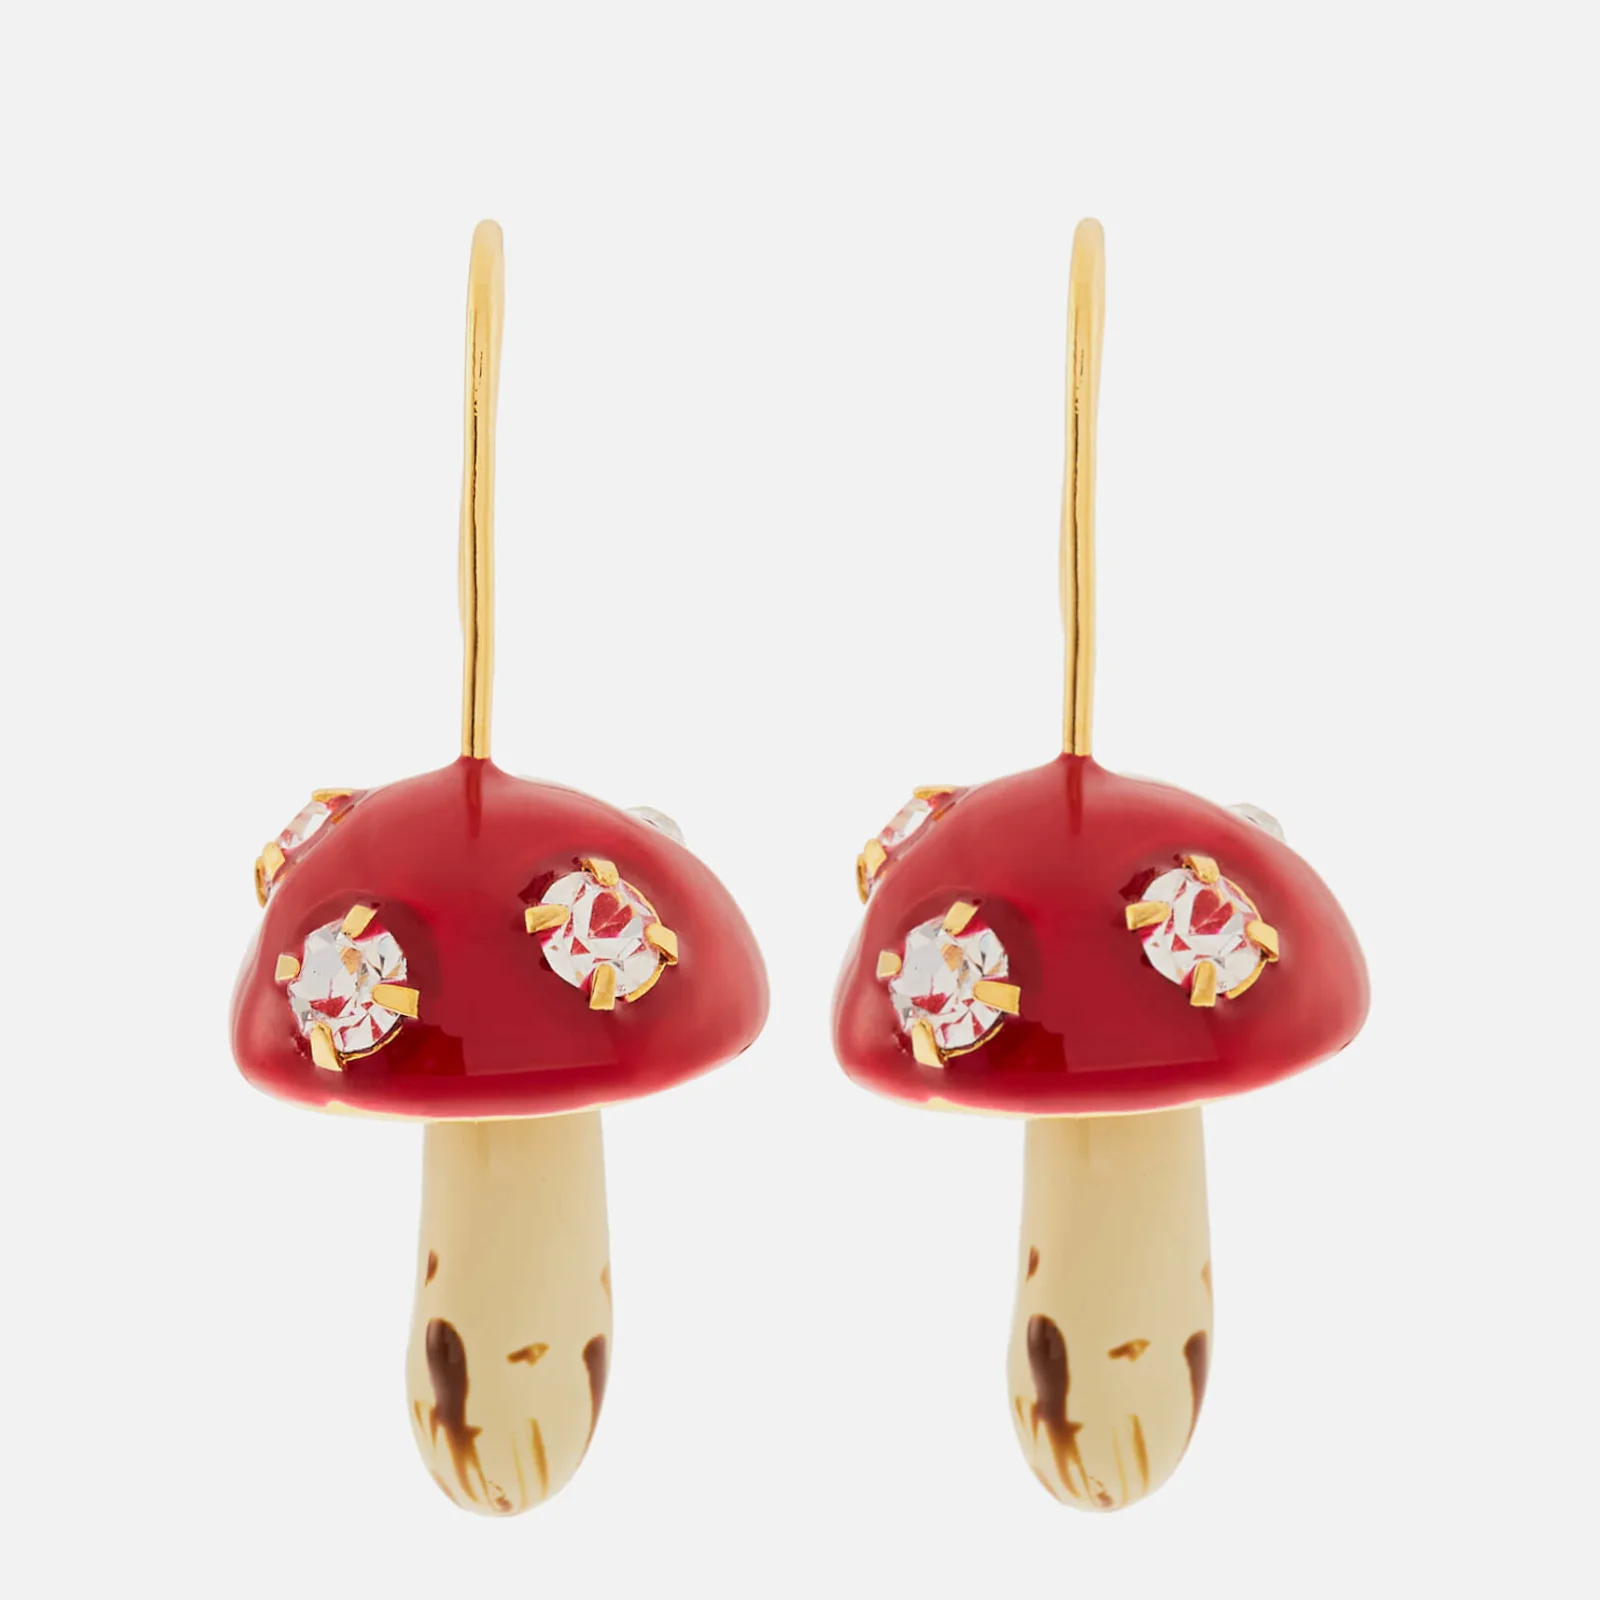 Marni Women's Mushroom Earrings - Red Image 1